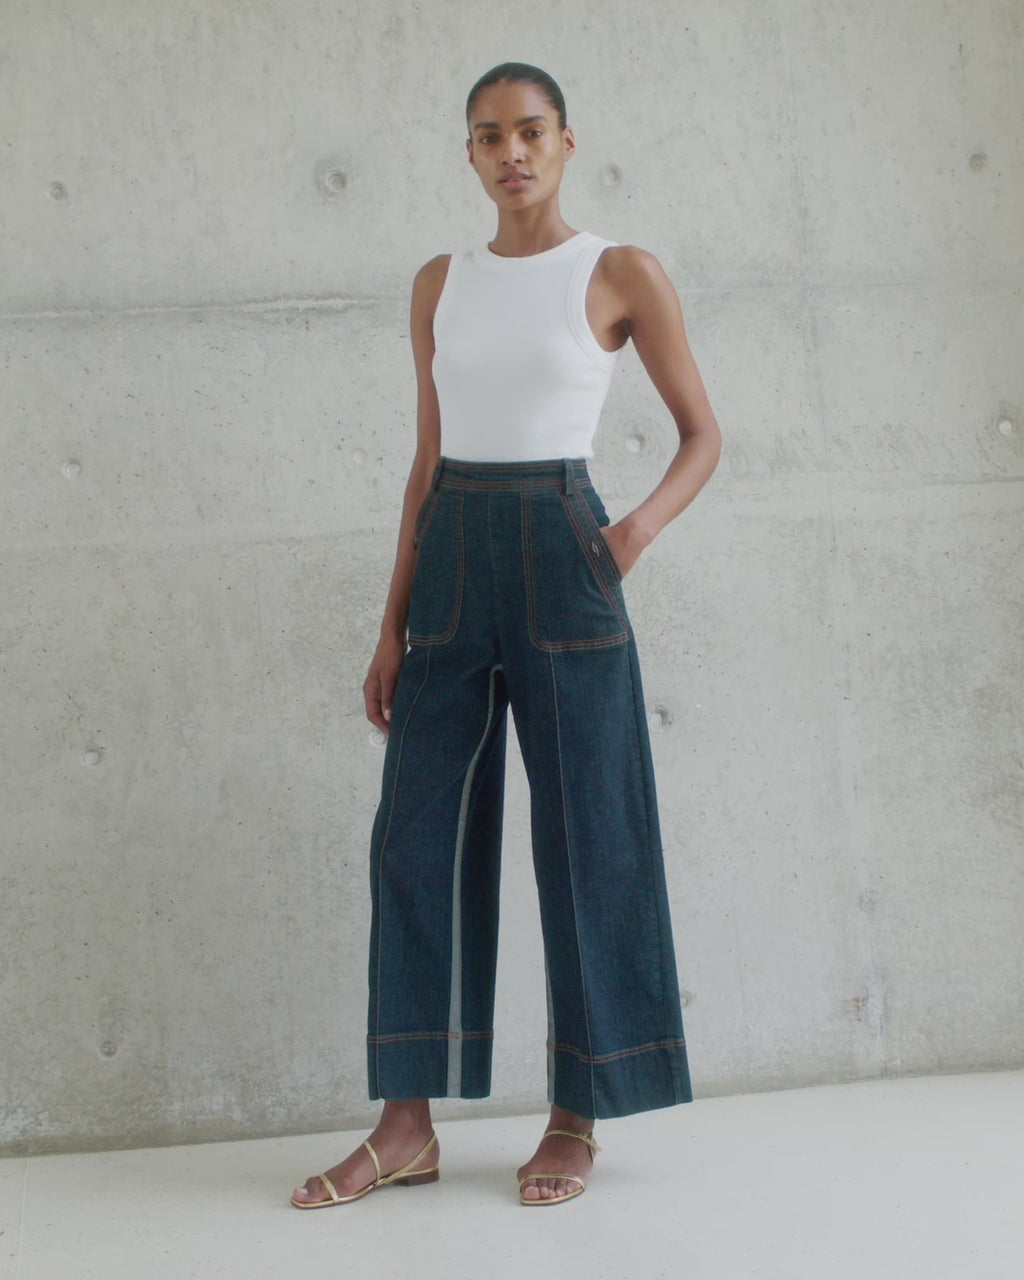 Wiggy Kit | The Inside Stripe Jean | Video of model wearing high waisted dark Indigo jeans